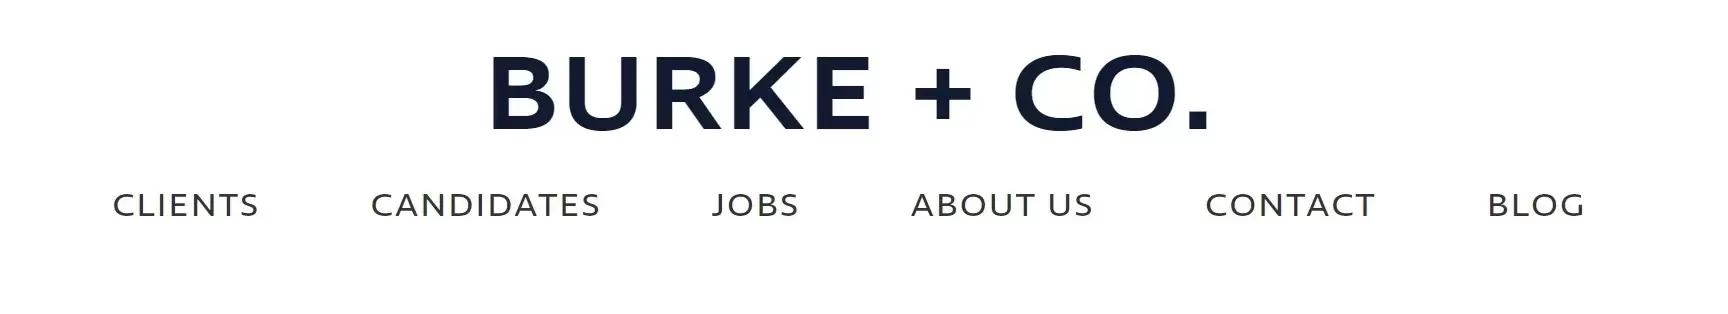 Burke + Co: Company Profile & Reviews